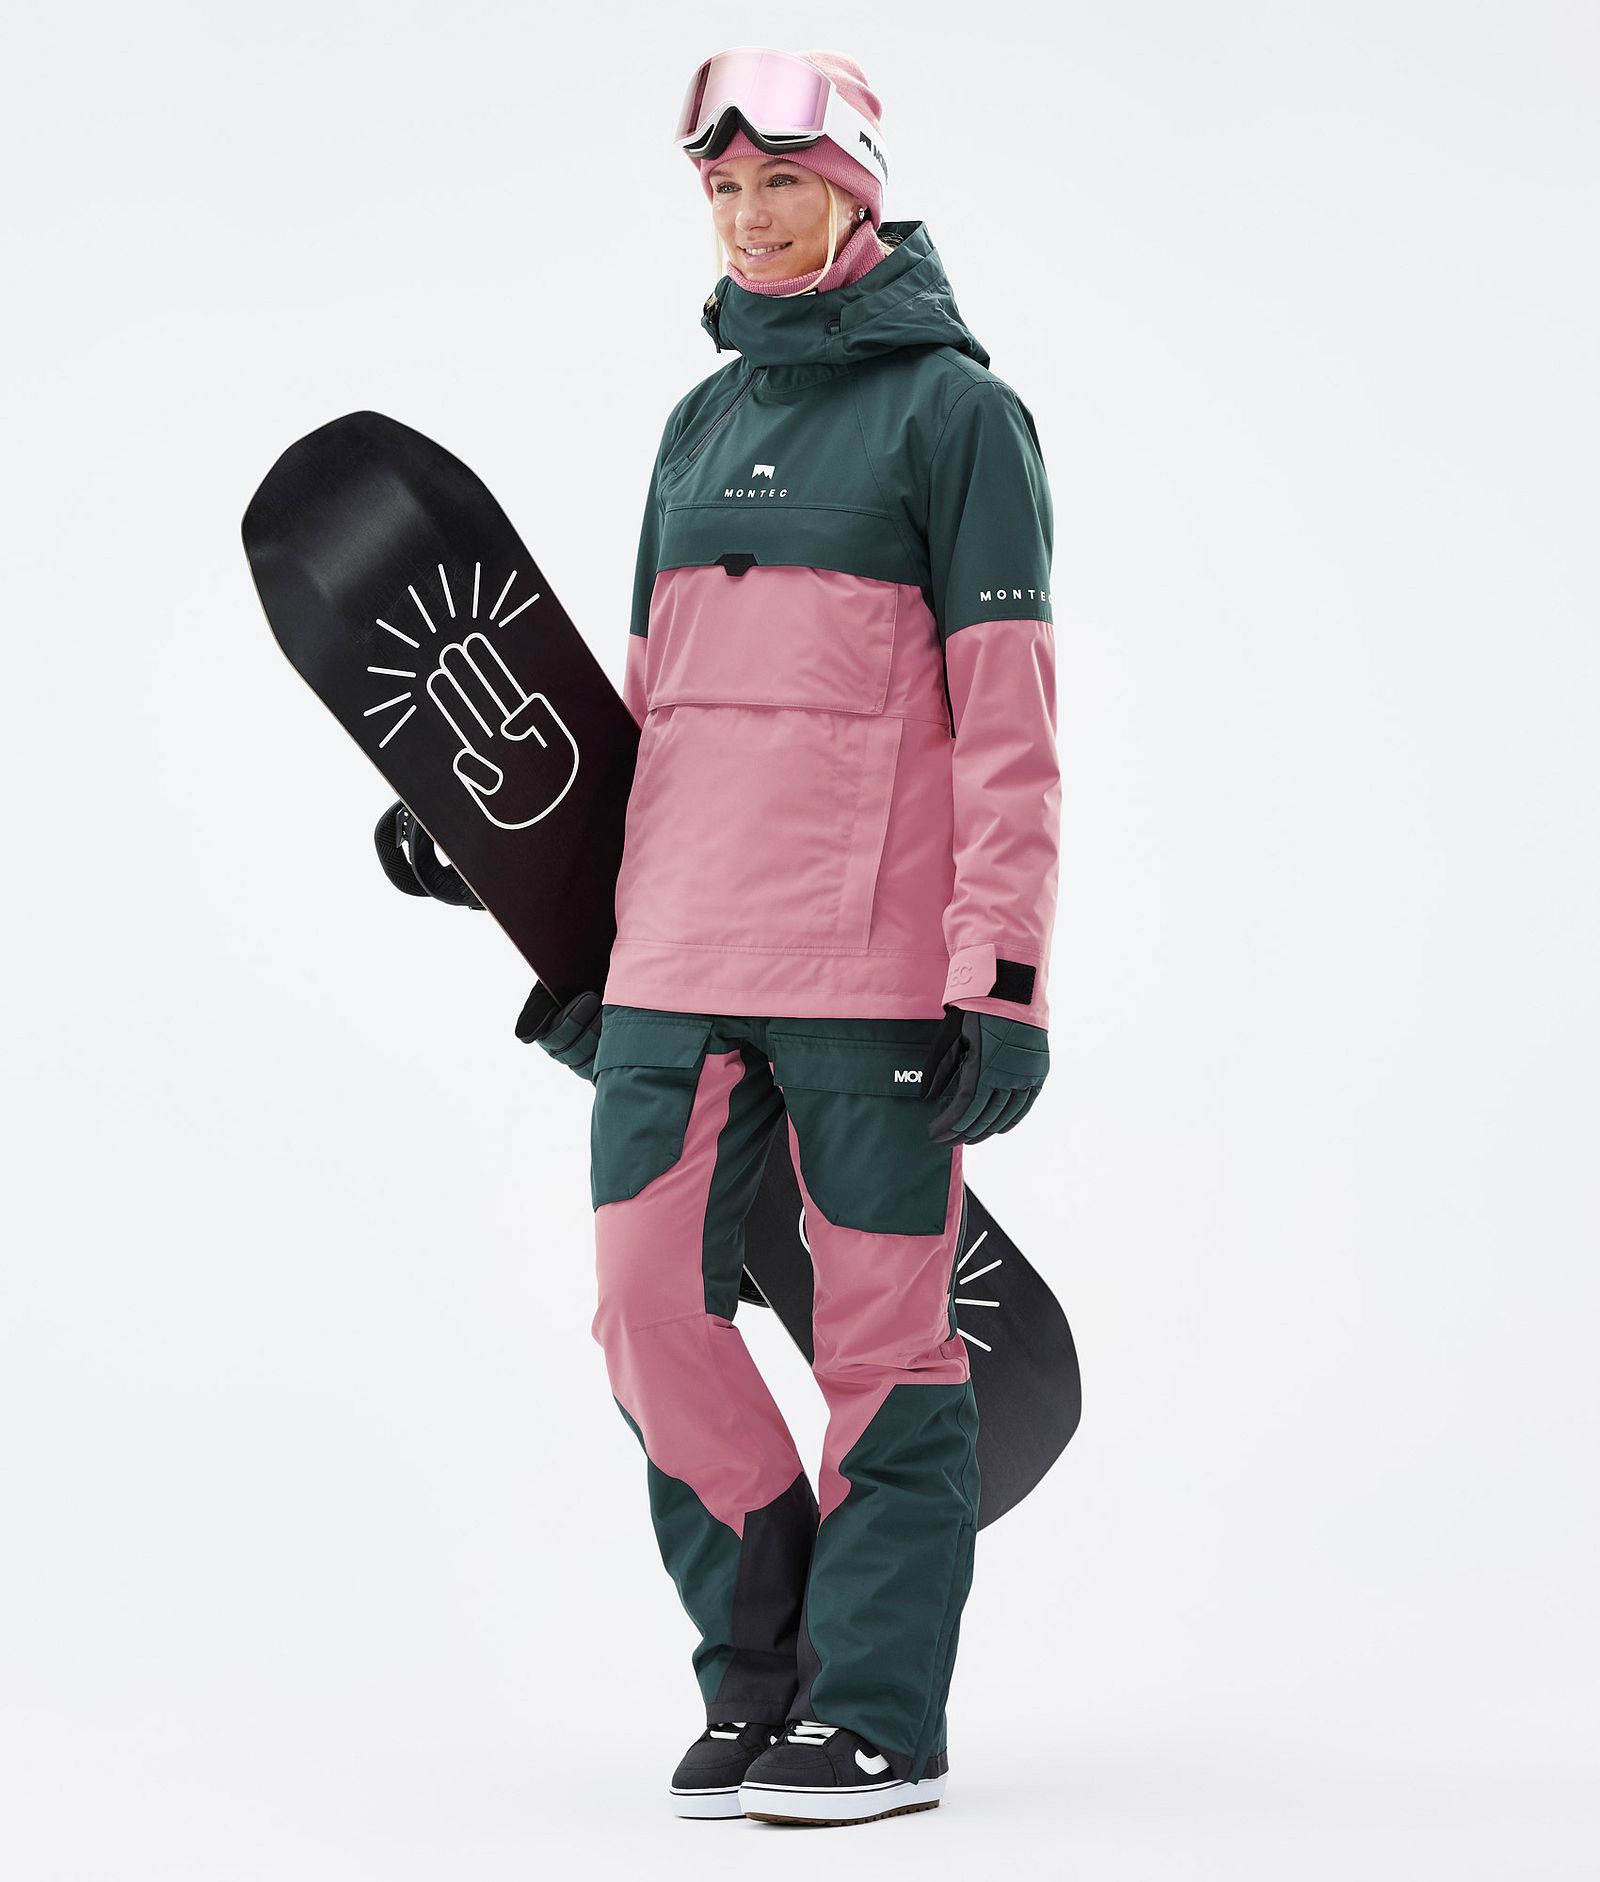 Dune W Giacca Snowboard Donna Dark Atlantic/Pink